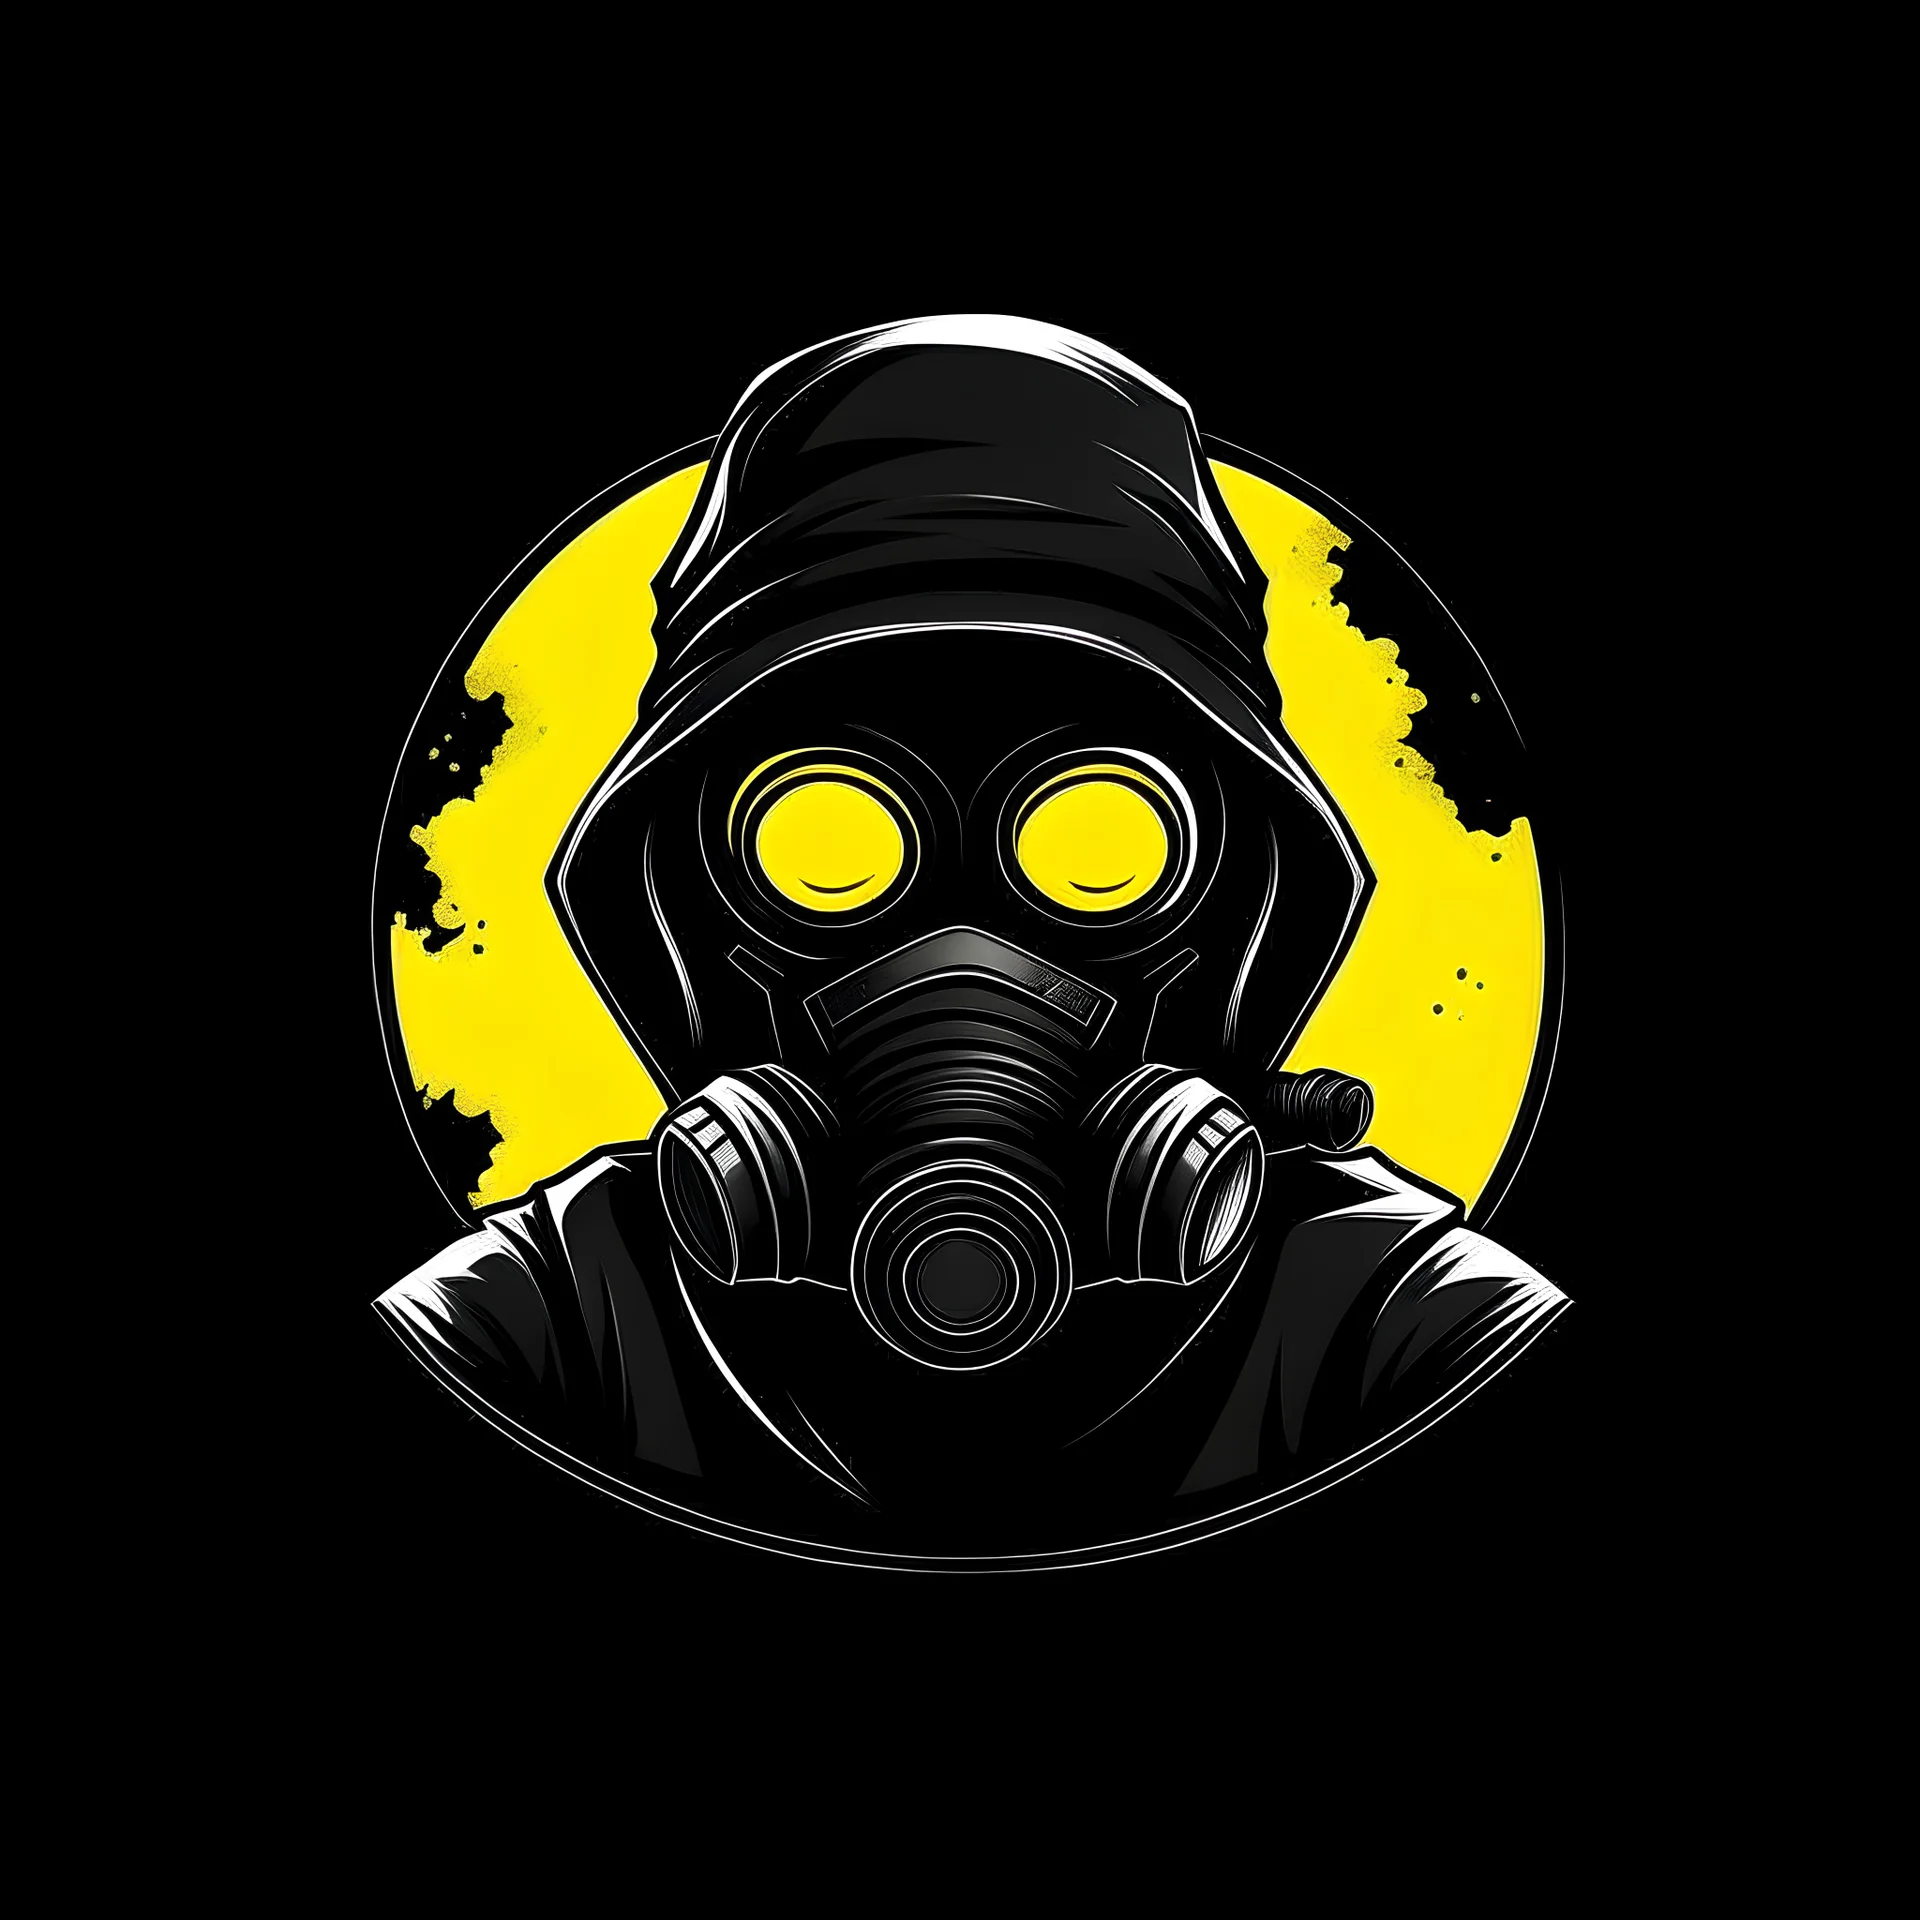 create logo symbol, shadow guard, respirator mask, yellow eyes, cap backwards